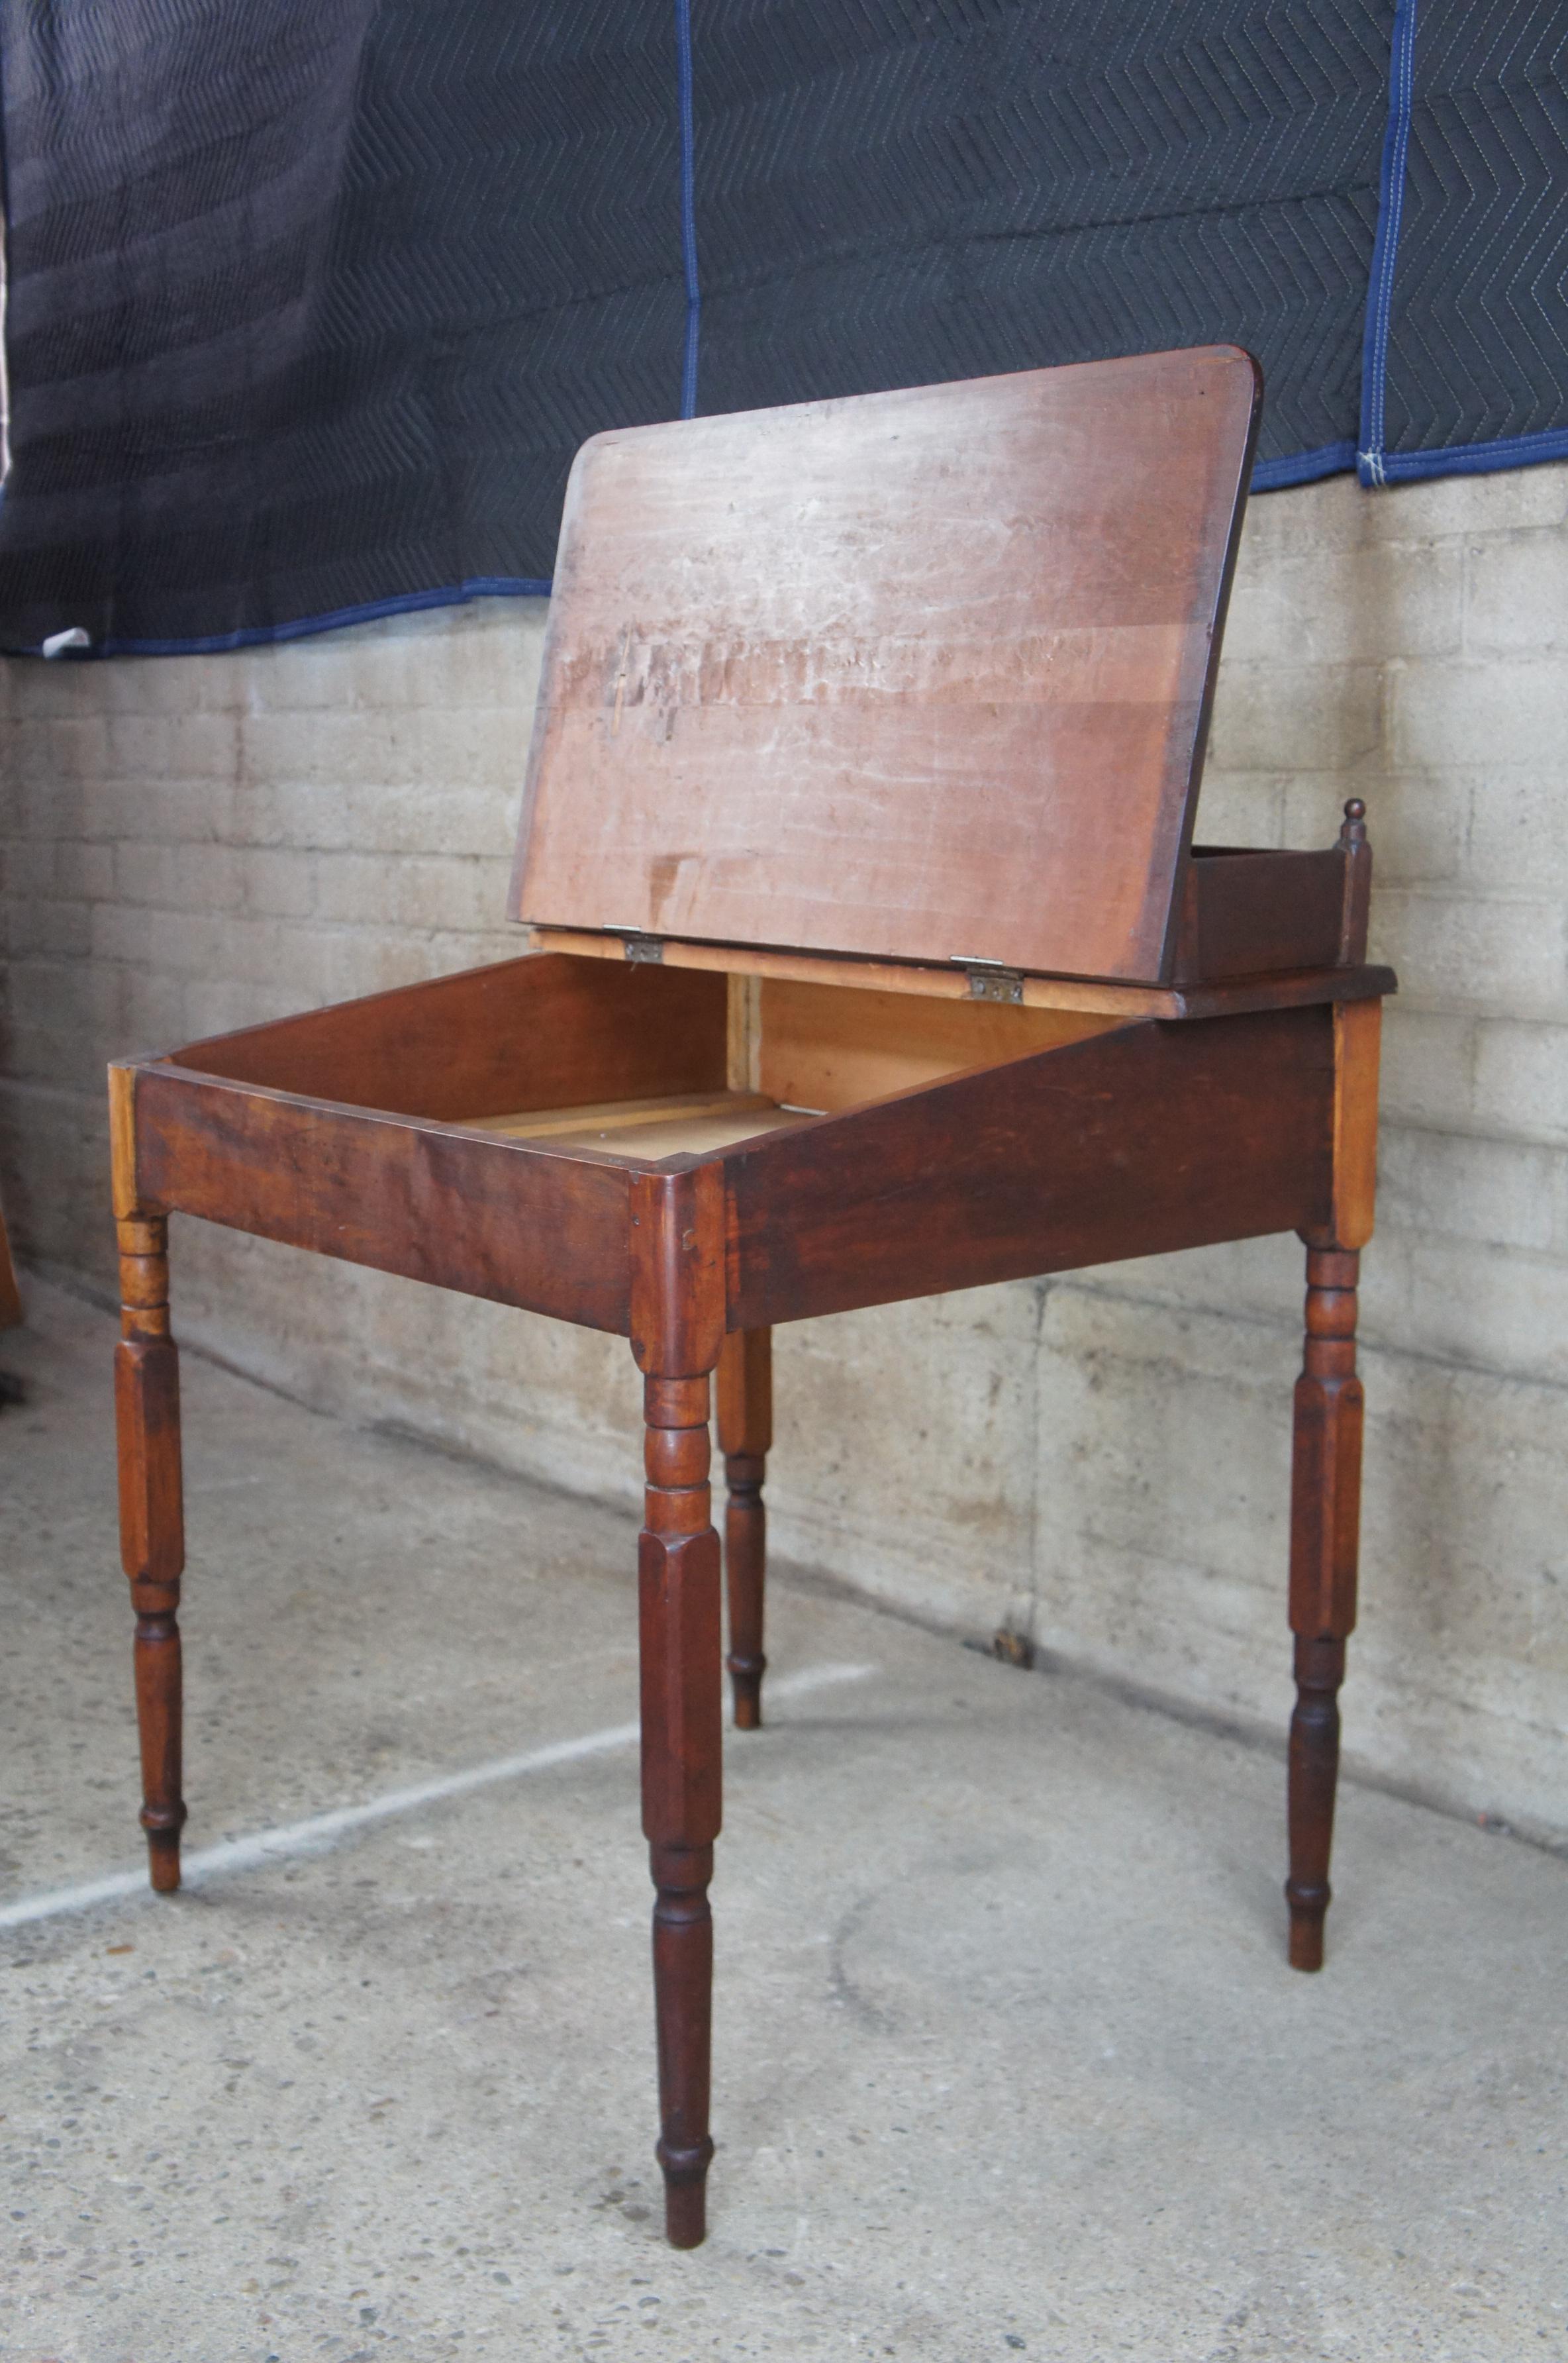 19th Century Primitive Antique Early American Cherry Slant Top Writing School Desk